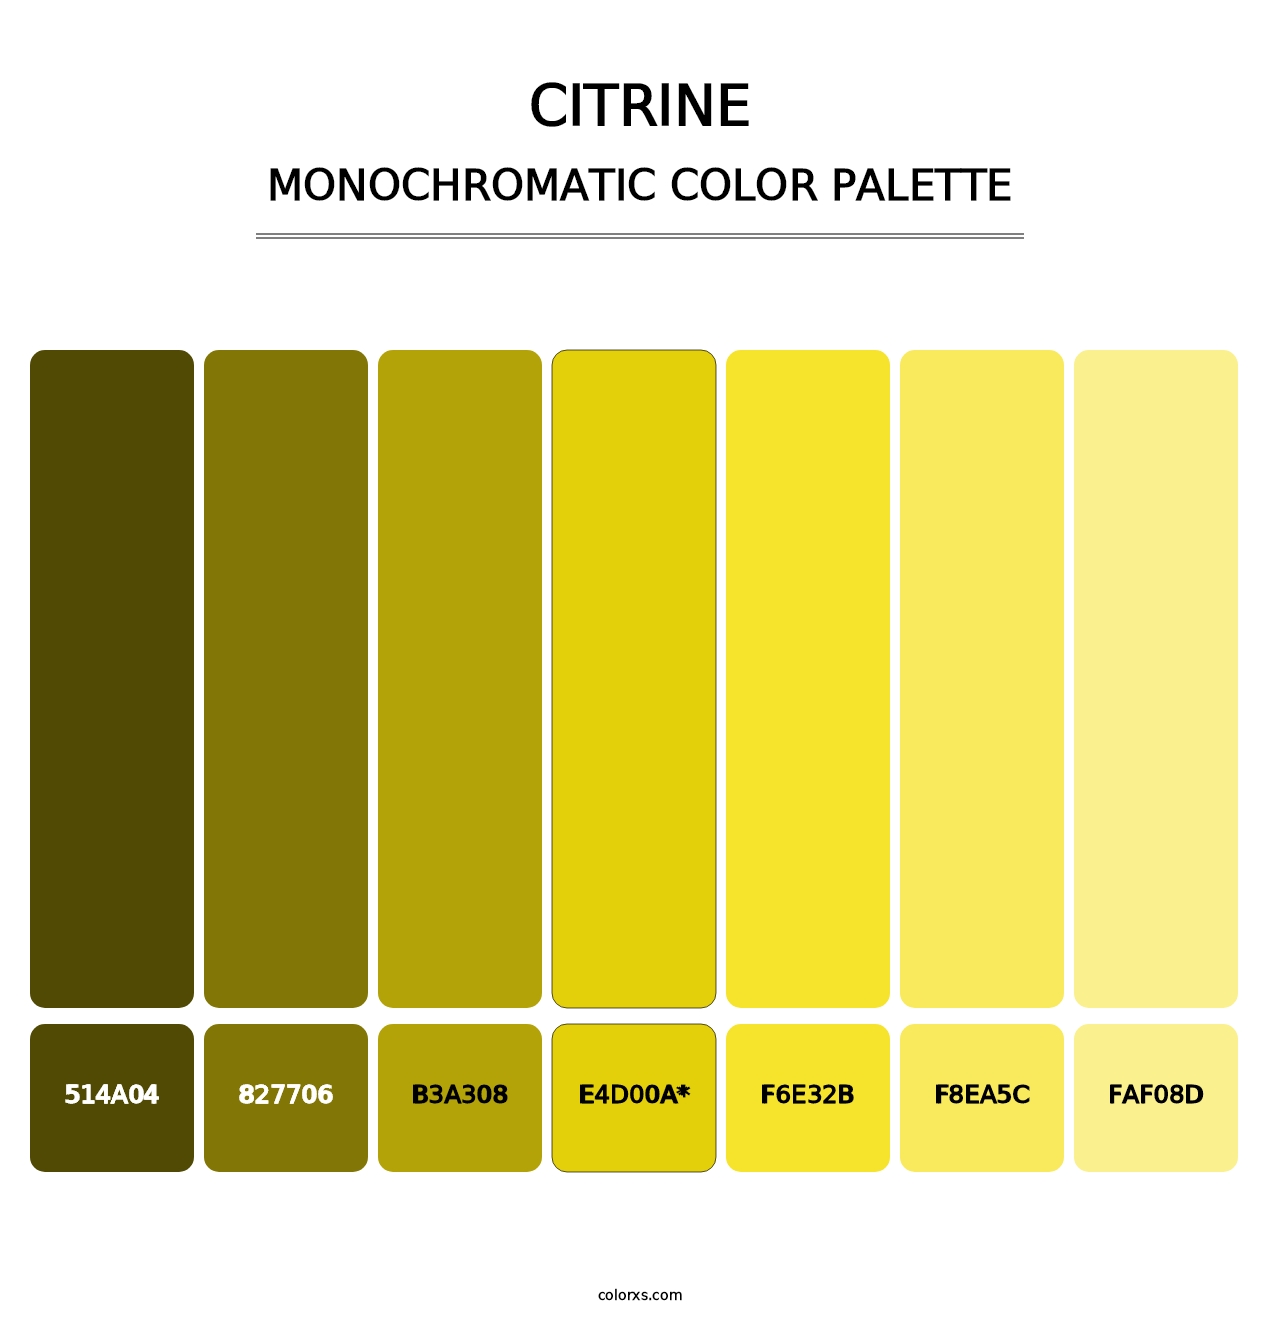 Citrine - Monochromatic Color Palette